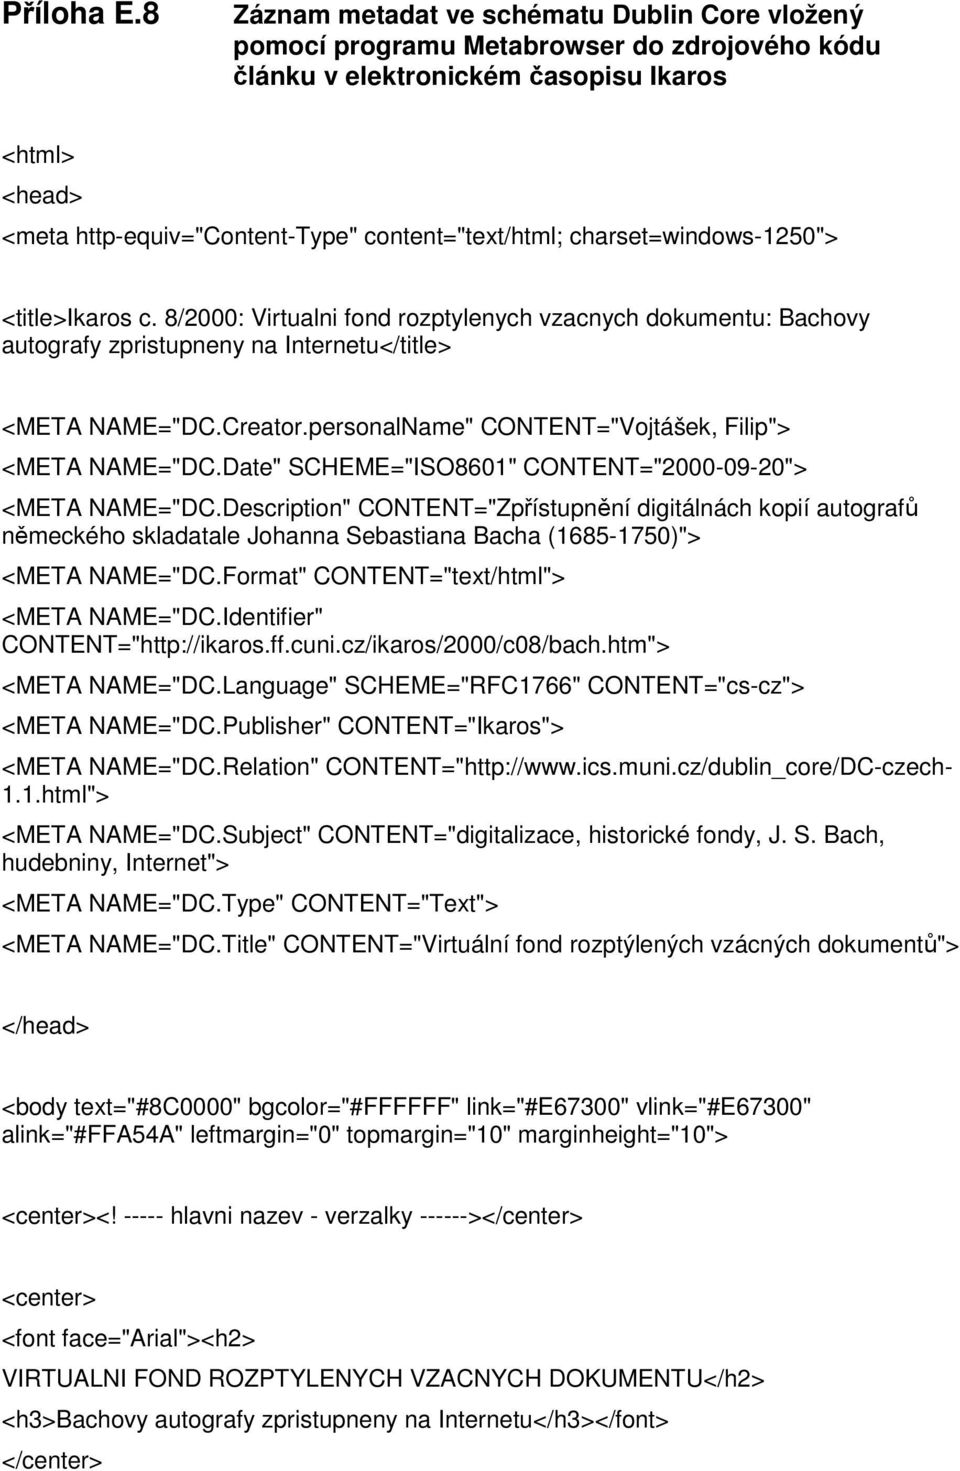 content="text/html; charset=windows-1250"> <title>ikaros c. 8/2000: Virtualni fond rozptylenych vzacnych dokumentu: Bachovy autografy zpristupneny na Internetu</title> <META NAME="DC.Creator.